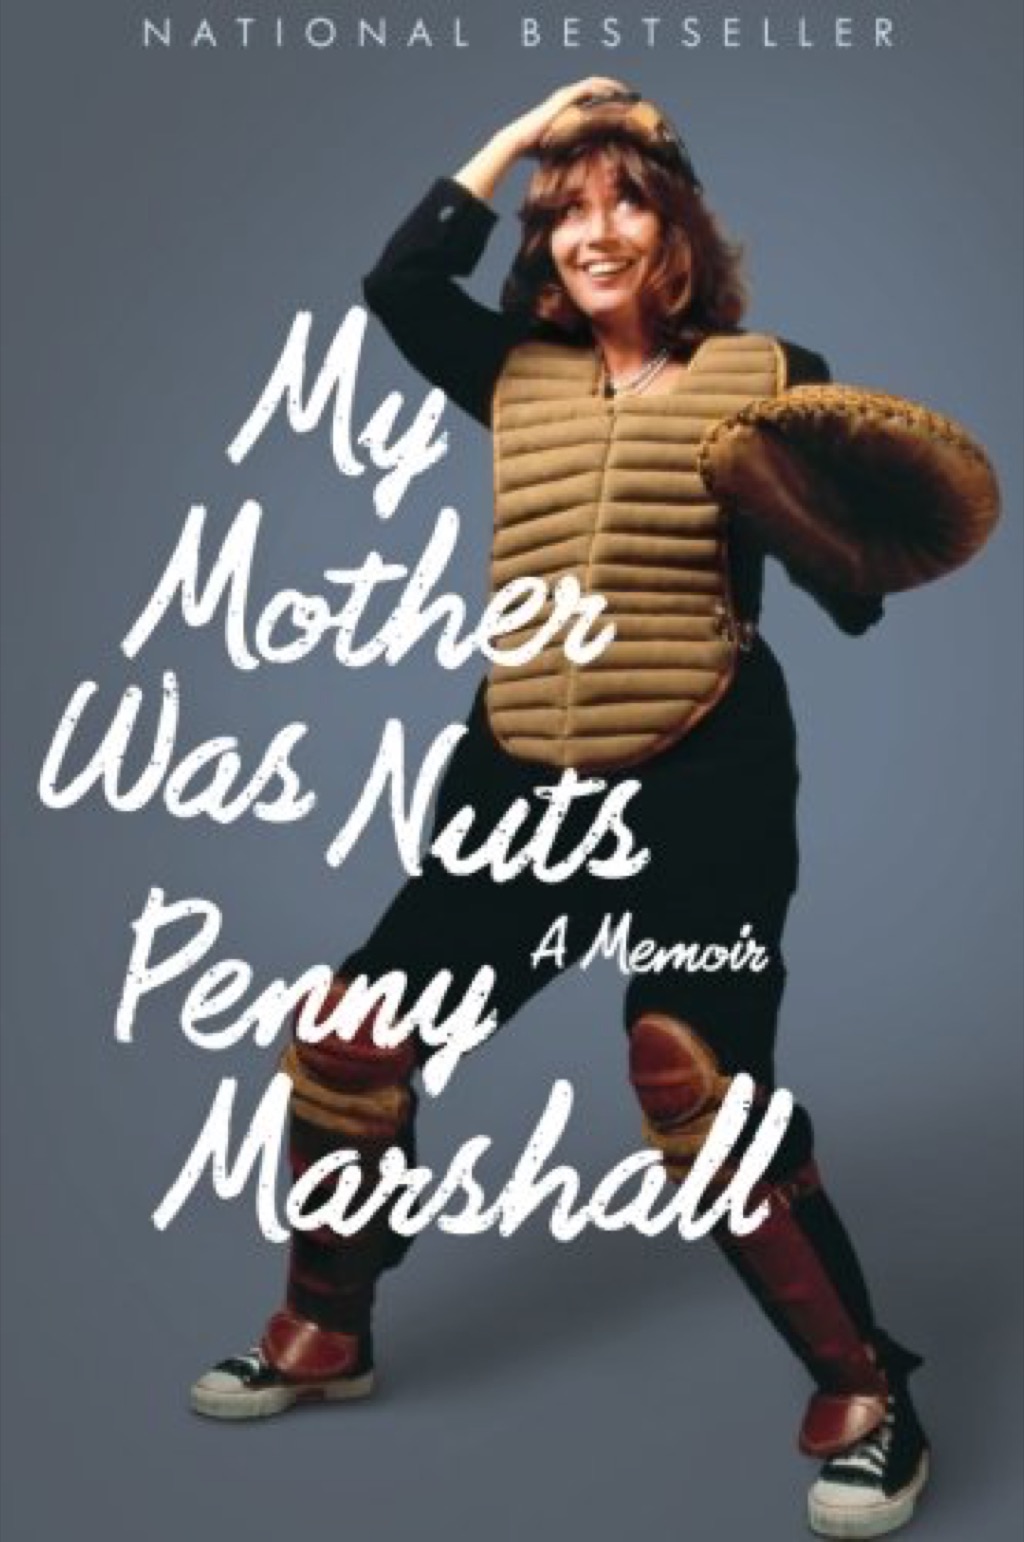 penny marshall funniest Celebrity Books